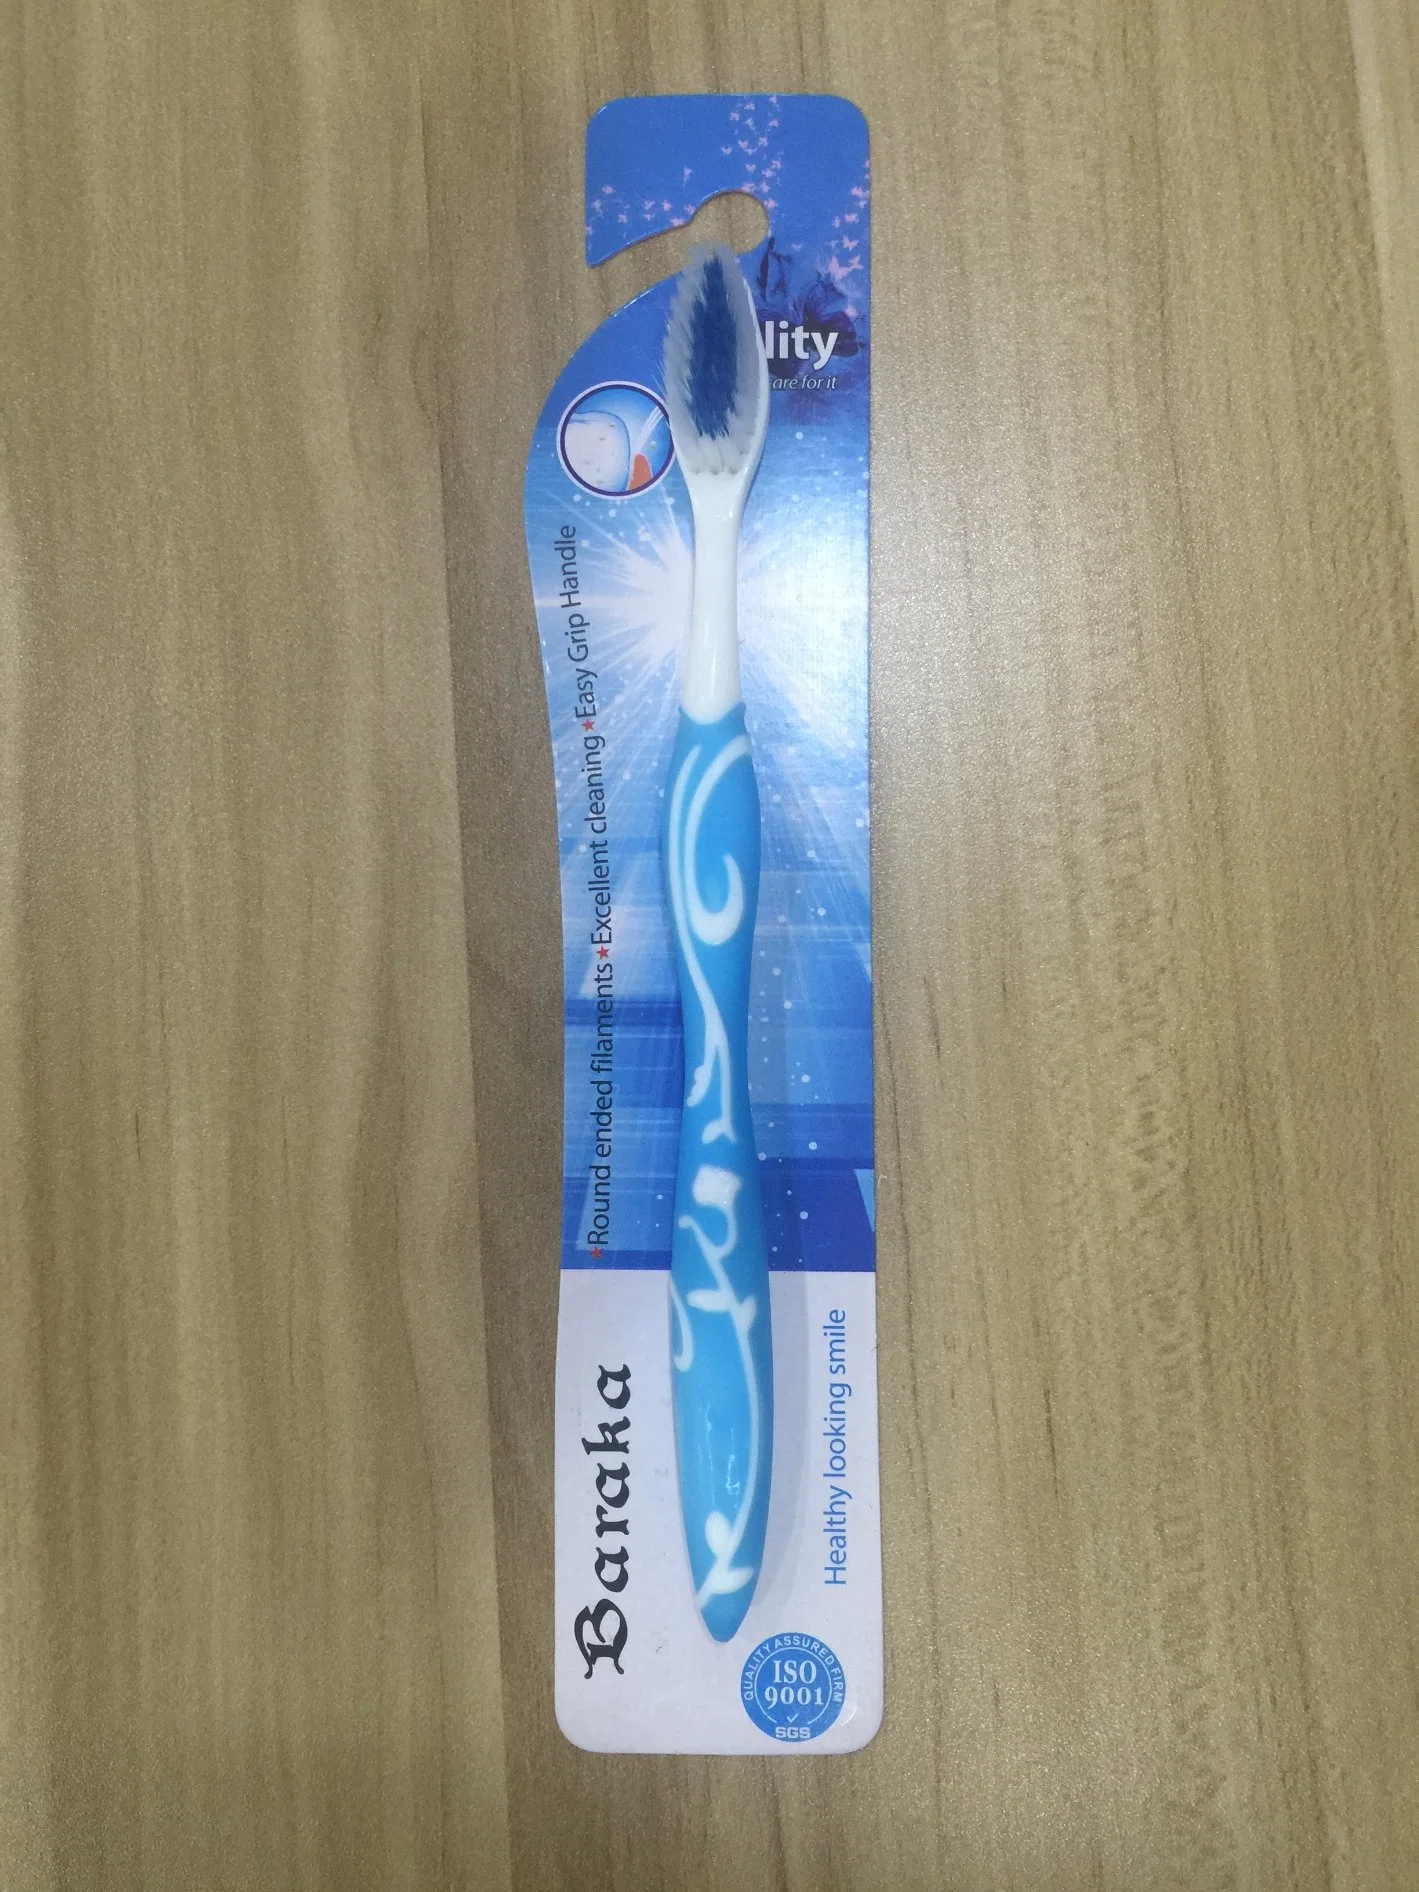 Hot Selling OEM Dental Kit Adult Toothbrush Teeth Whitening